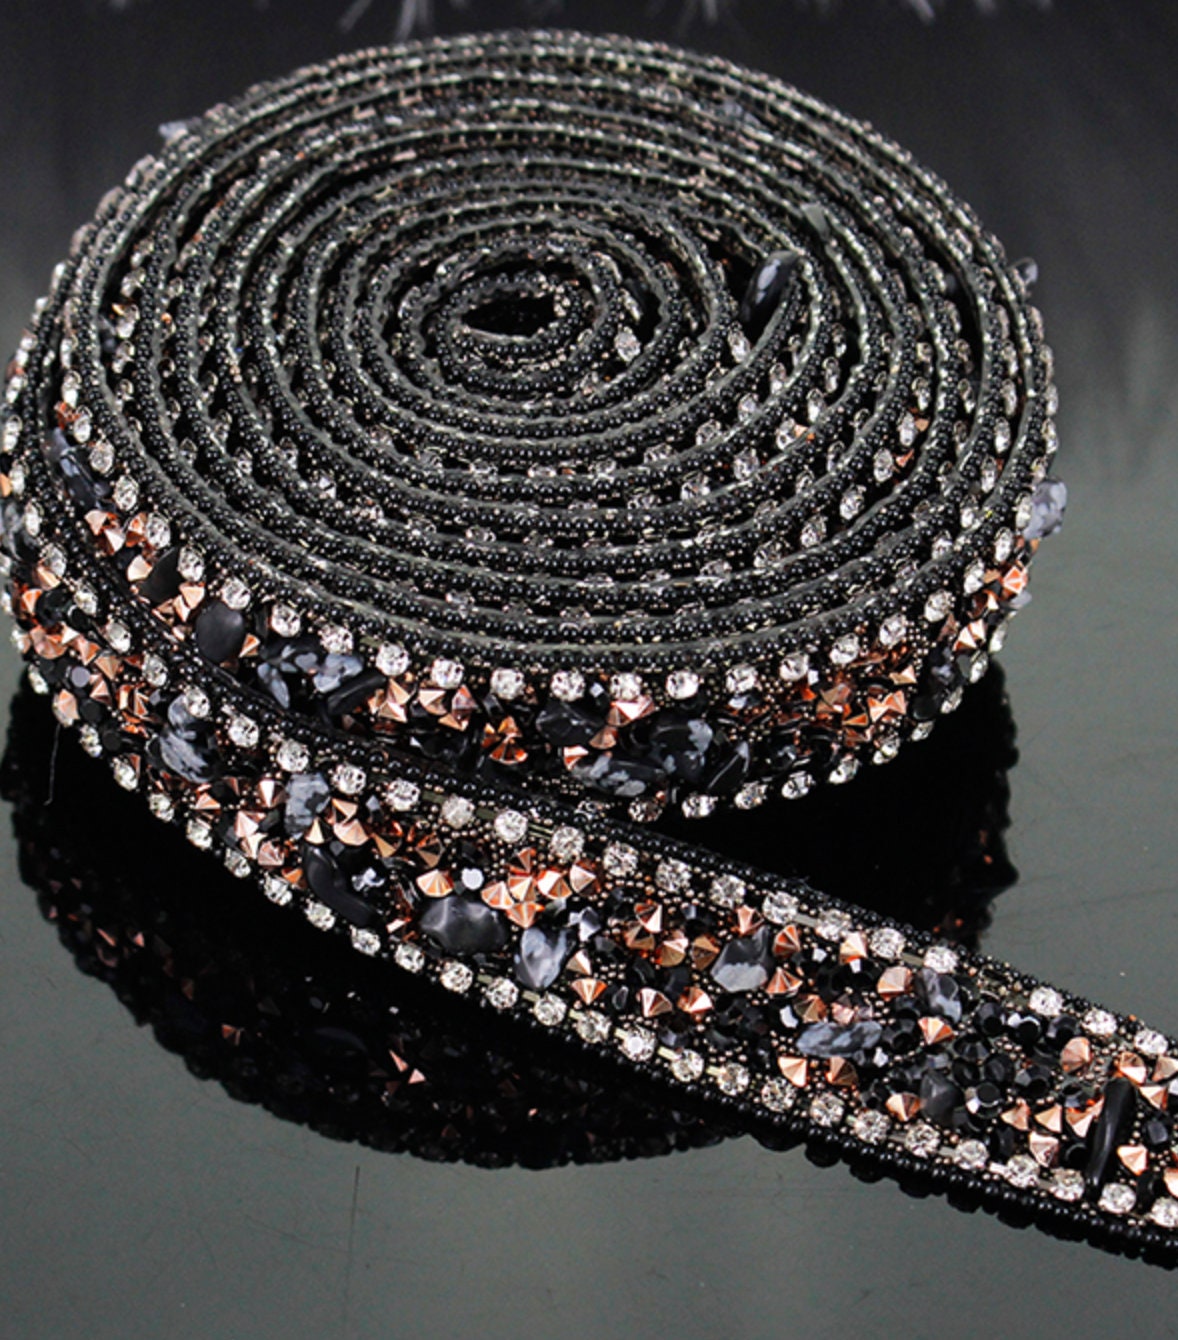 Costum Iron on Diamond Rhinestone Tape,1yard/lot,fancy Decorative  Trim,crystal Rhinestone Banding Roll